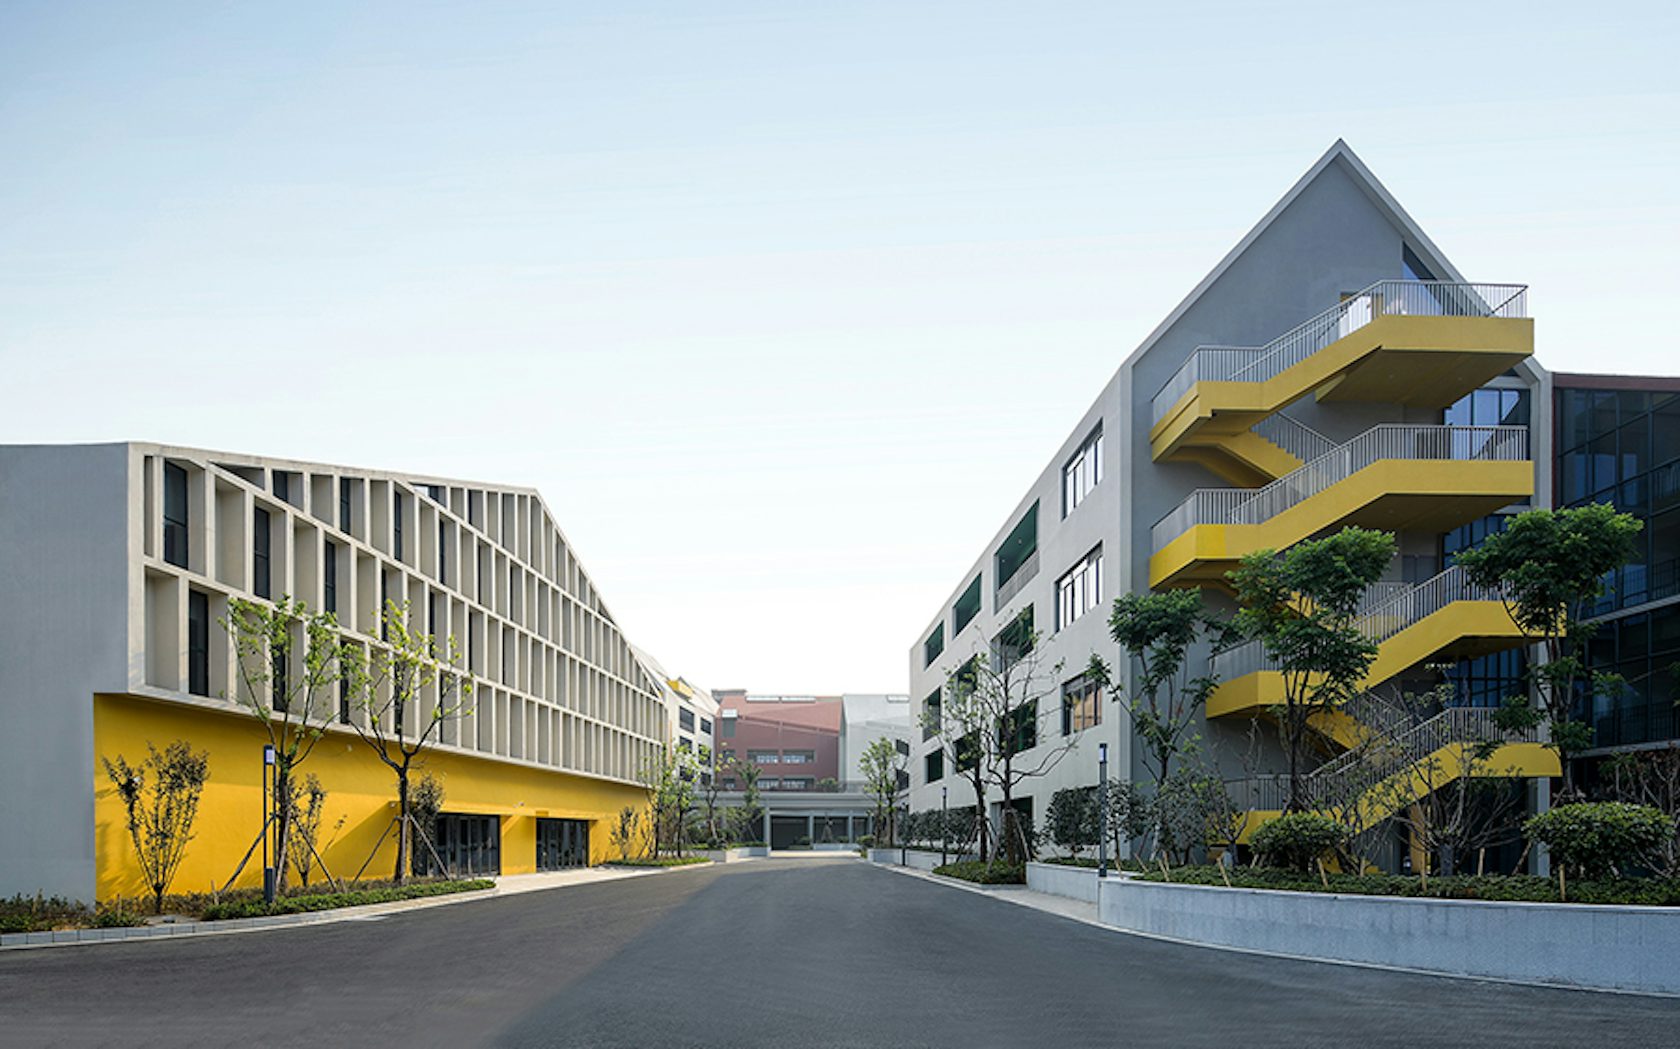 school buildings of the future